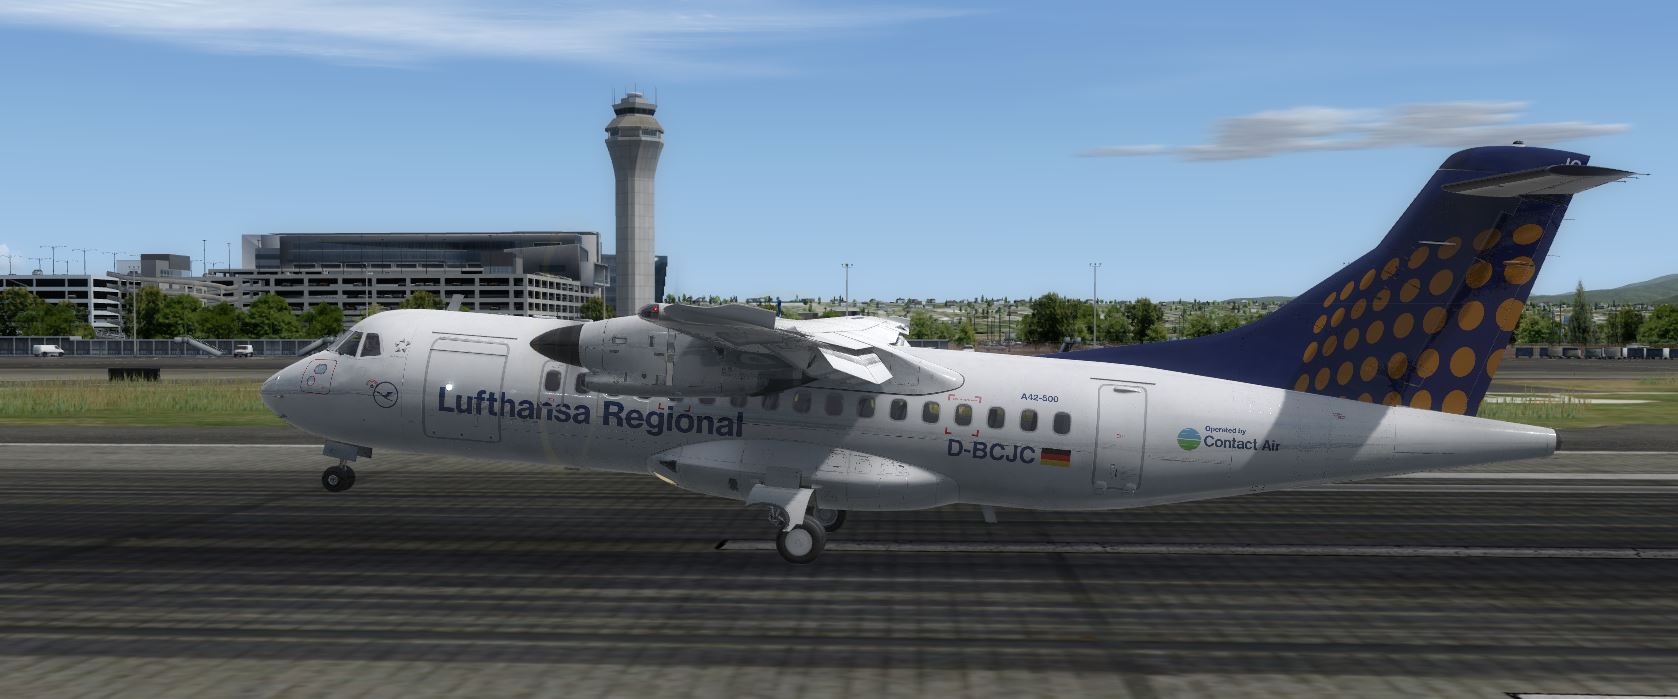 ATR42-500 Lufthansa-4513 